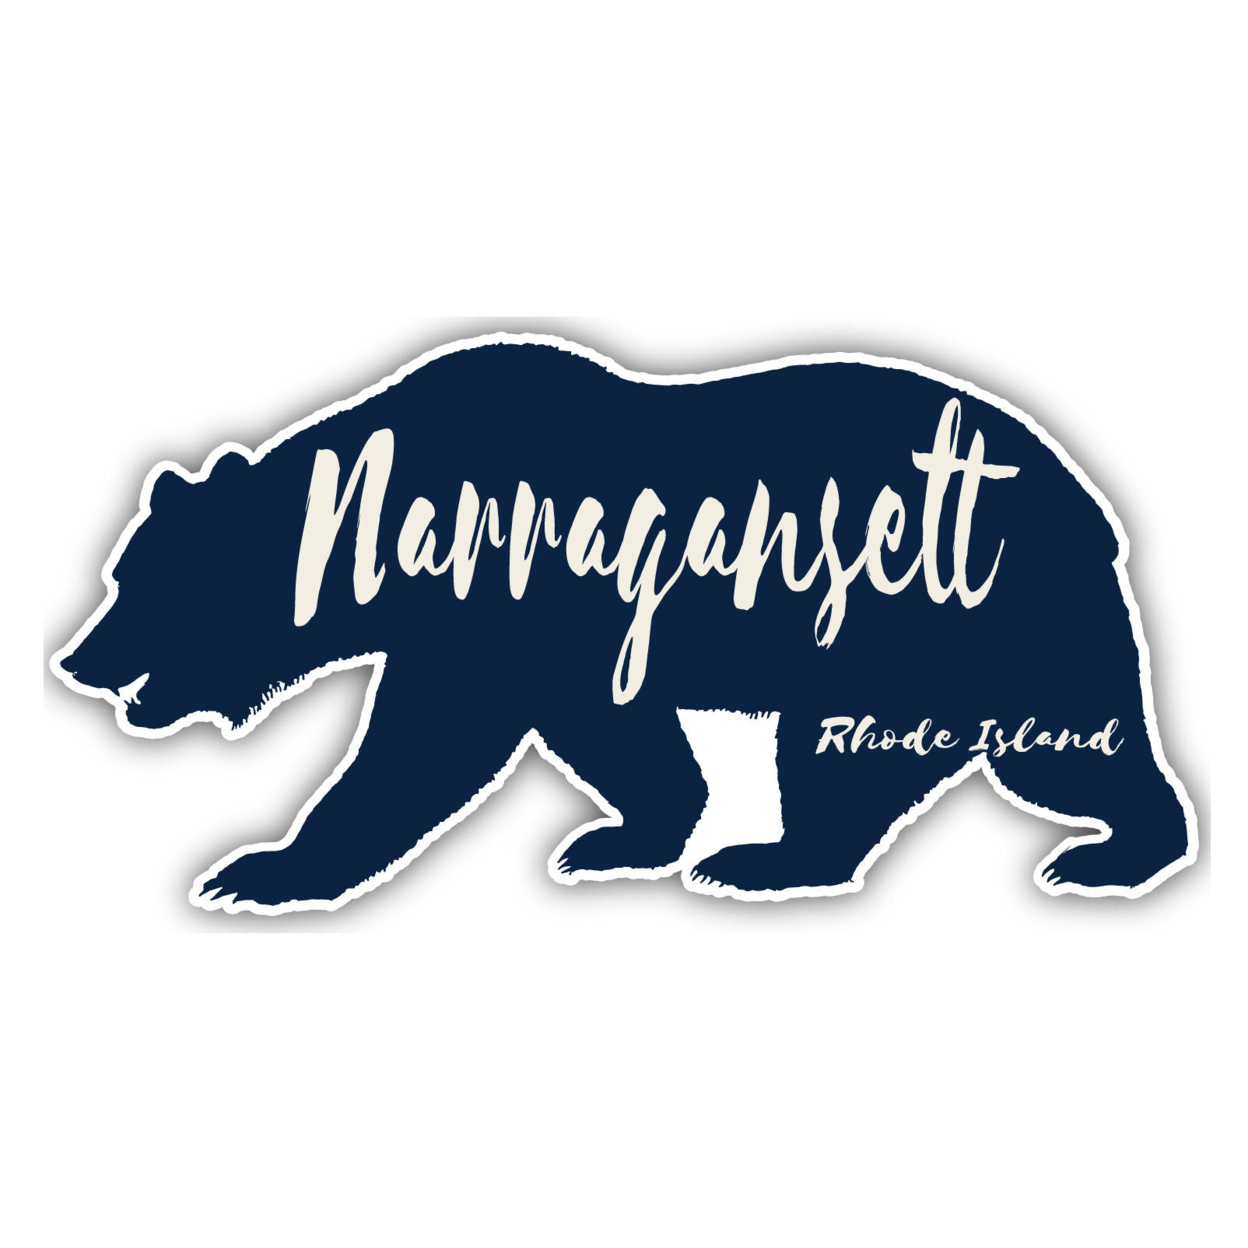 Narragansett Rhode Island Souvenir Decorative Stickers (Choose Theme And Size) - Single Unit, 2-Inch, Camp Life